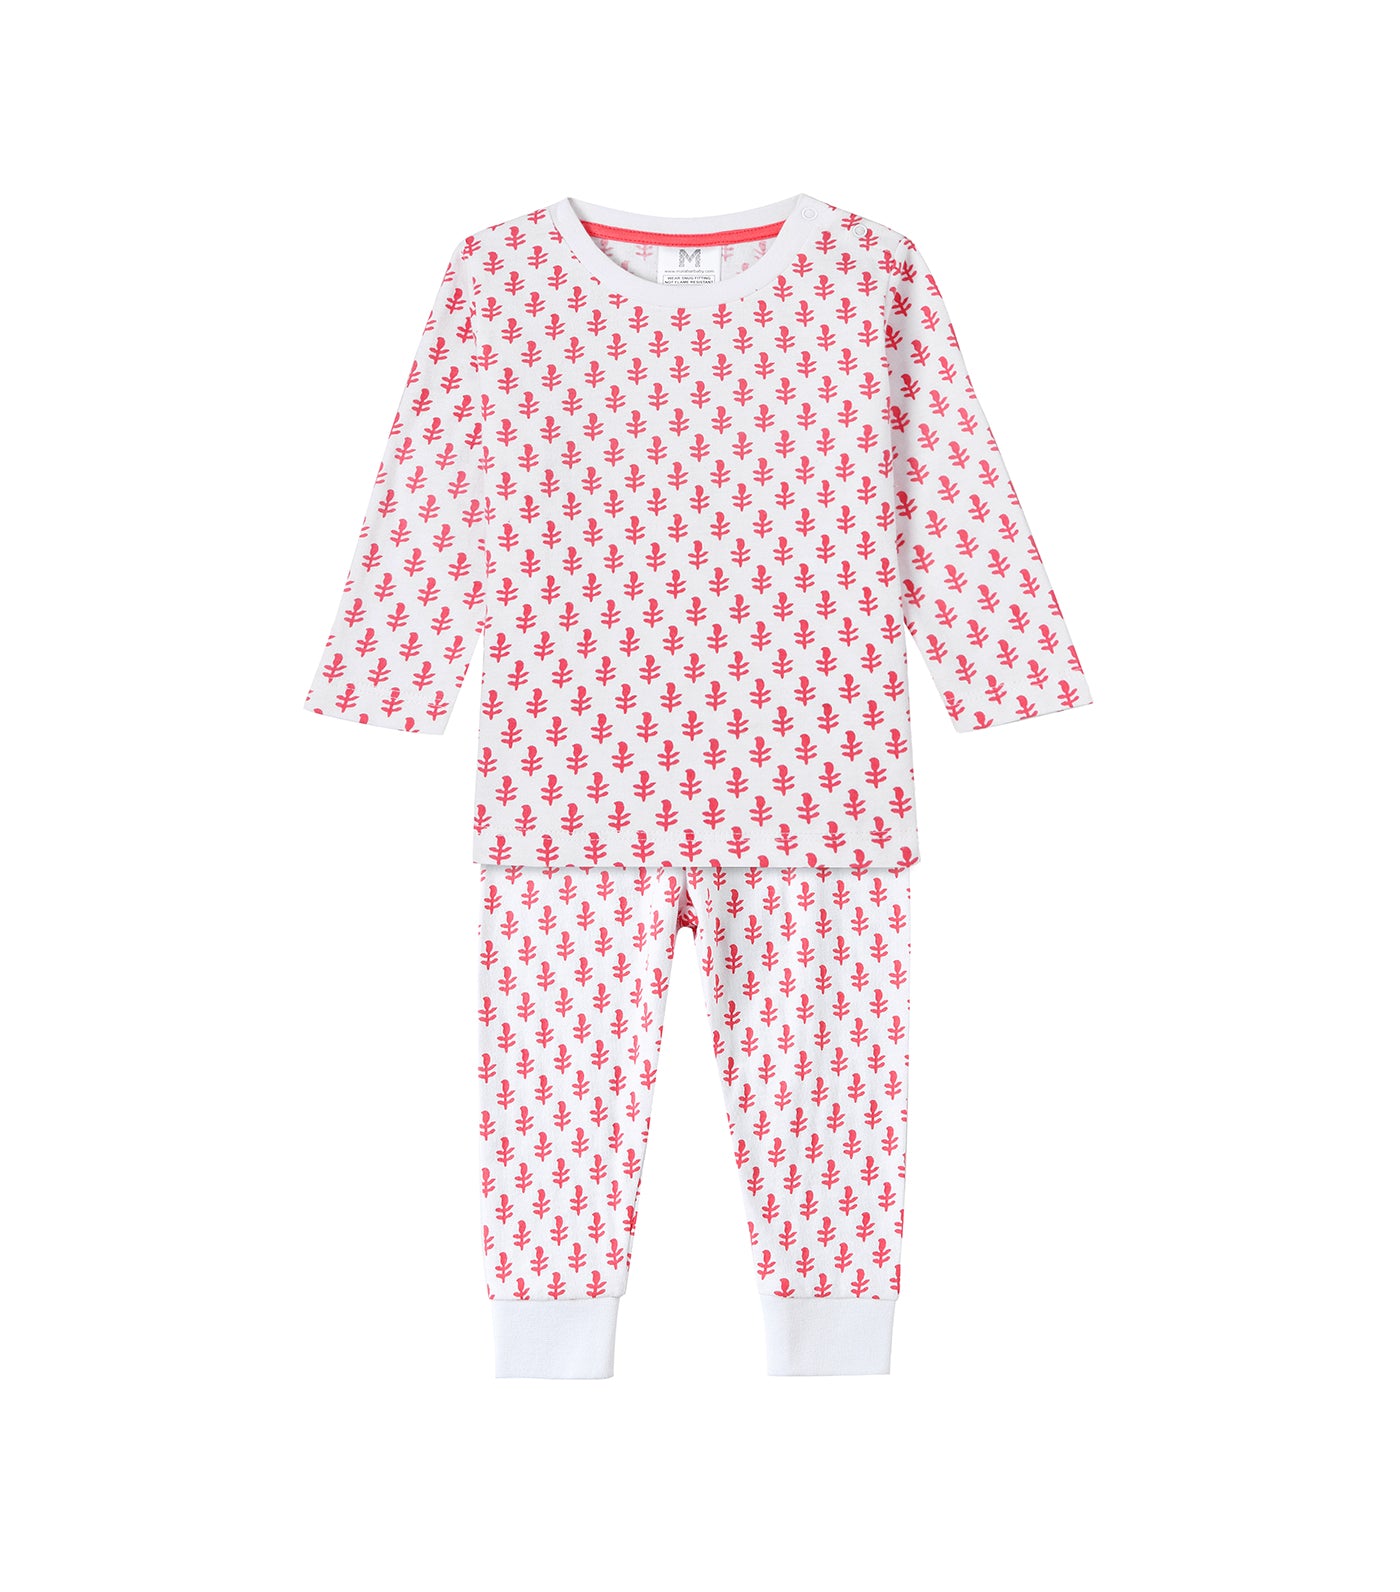 Malabar Baby Organic Cotton Knit PJ Set - Pink City